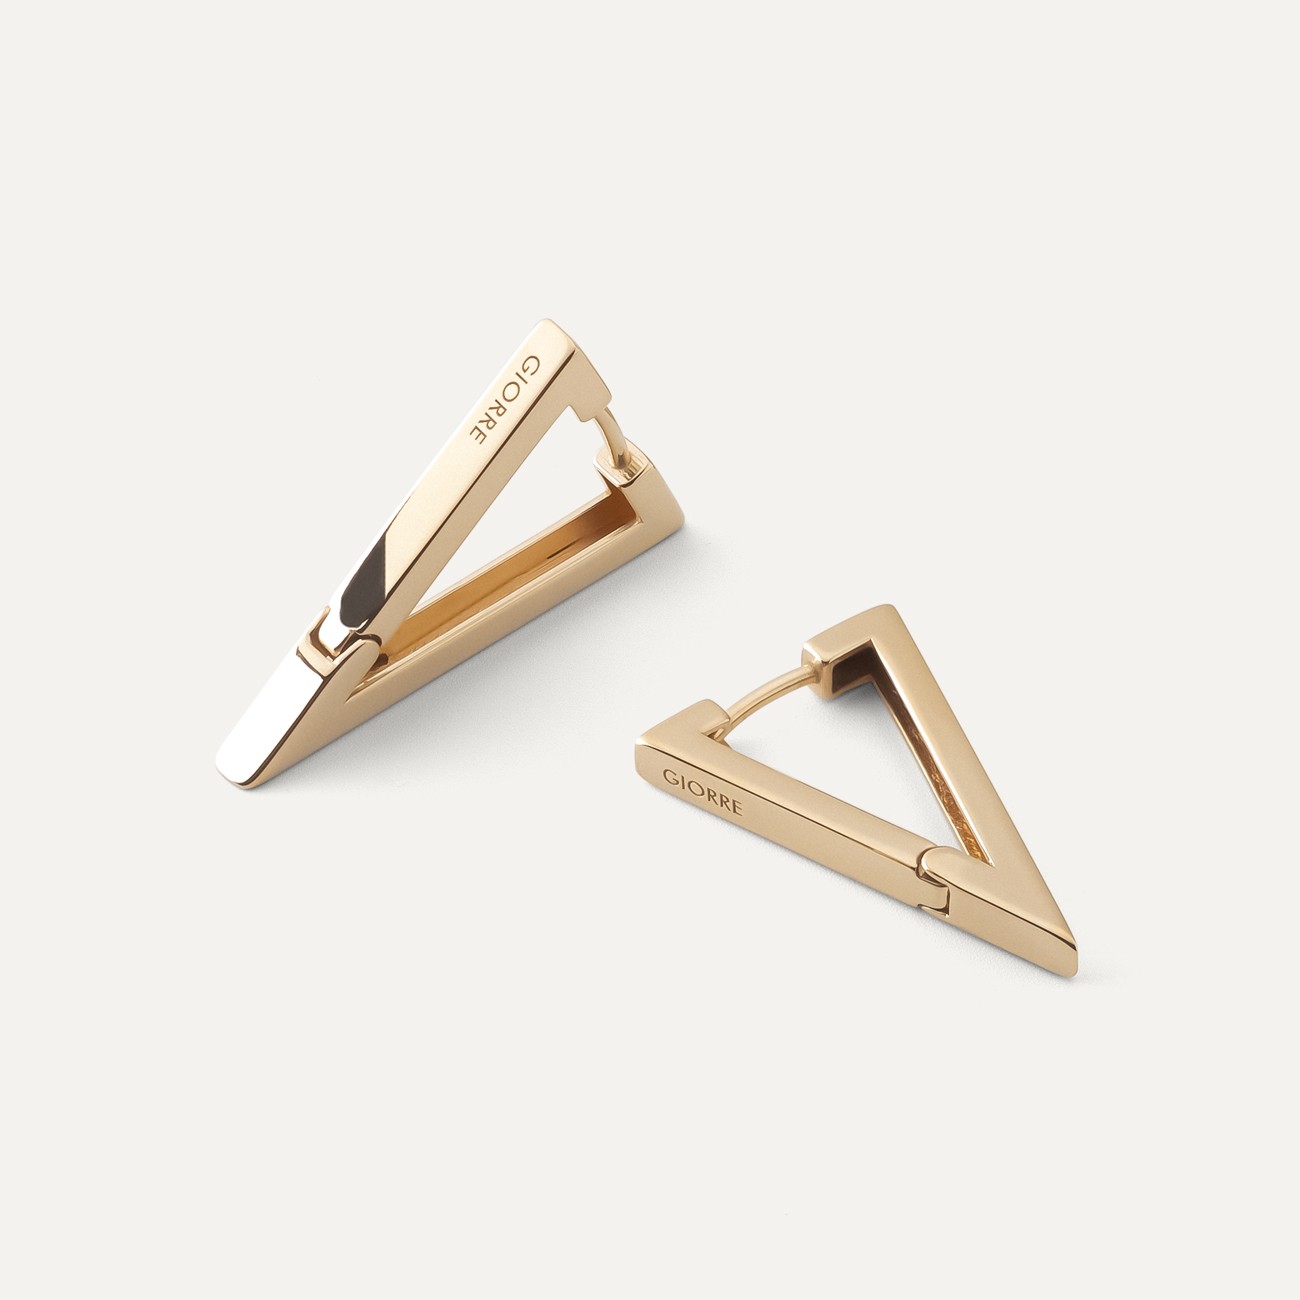 Triangles geometric earrings, sterling silver 925